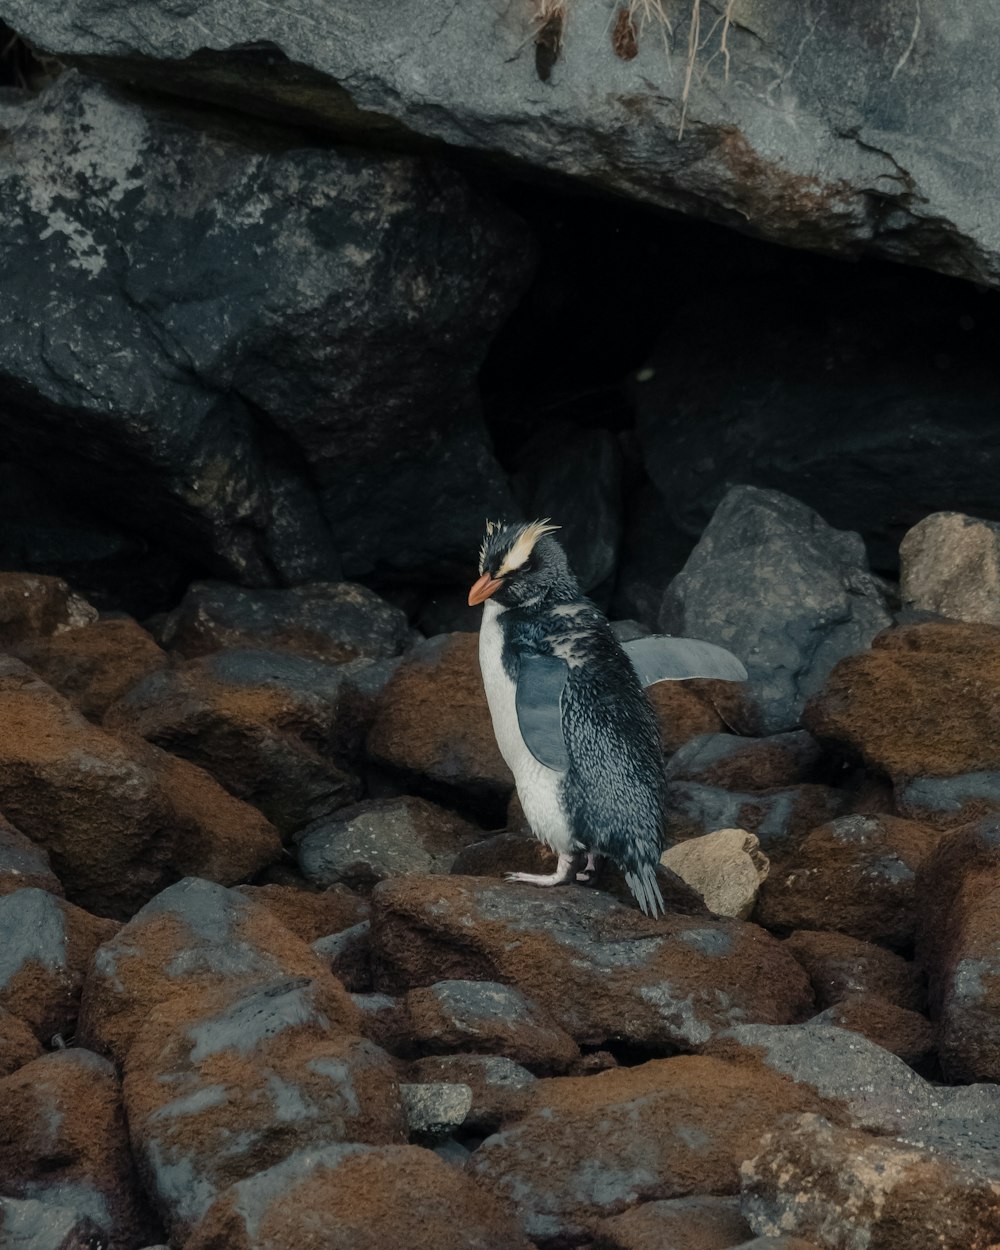 penguin on rocky ground during daytime